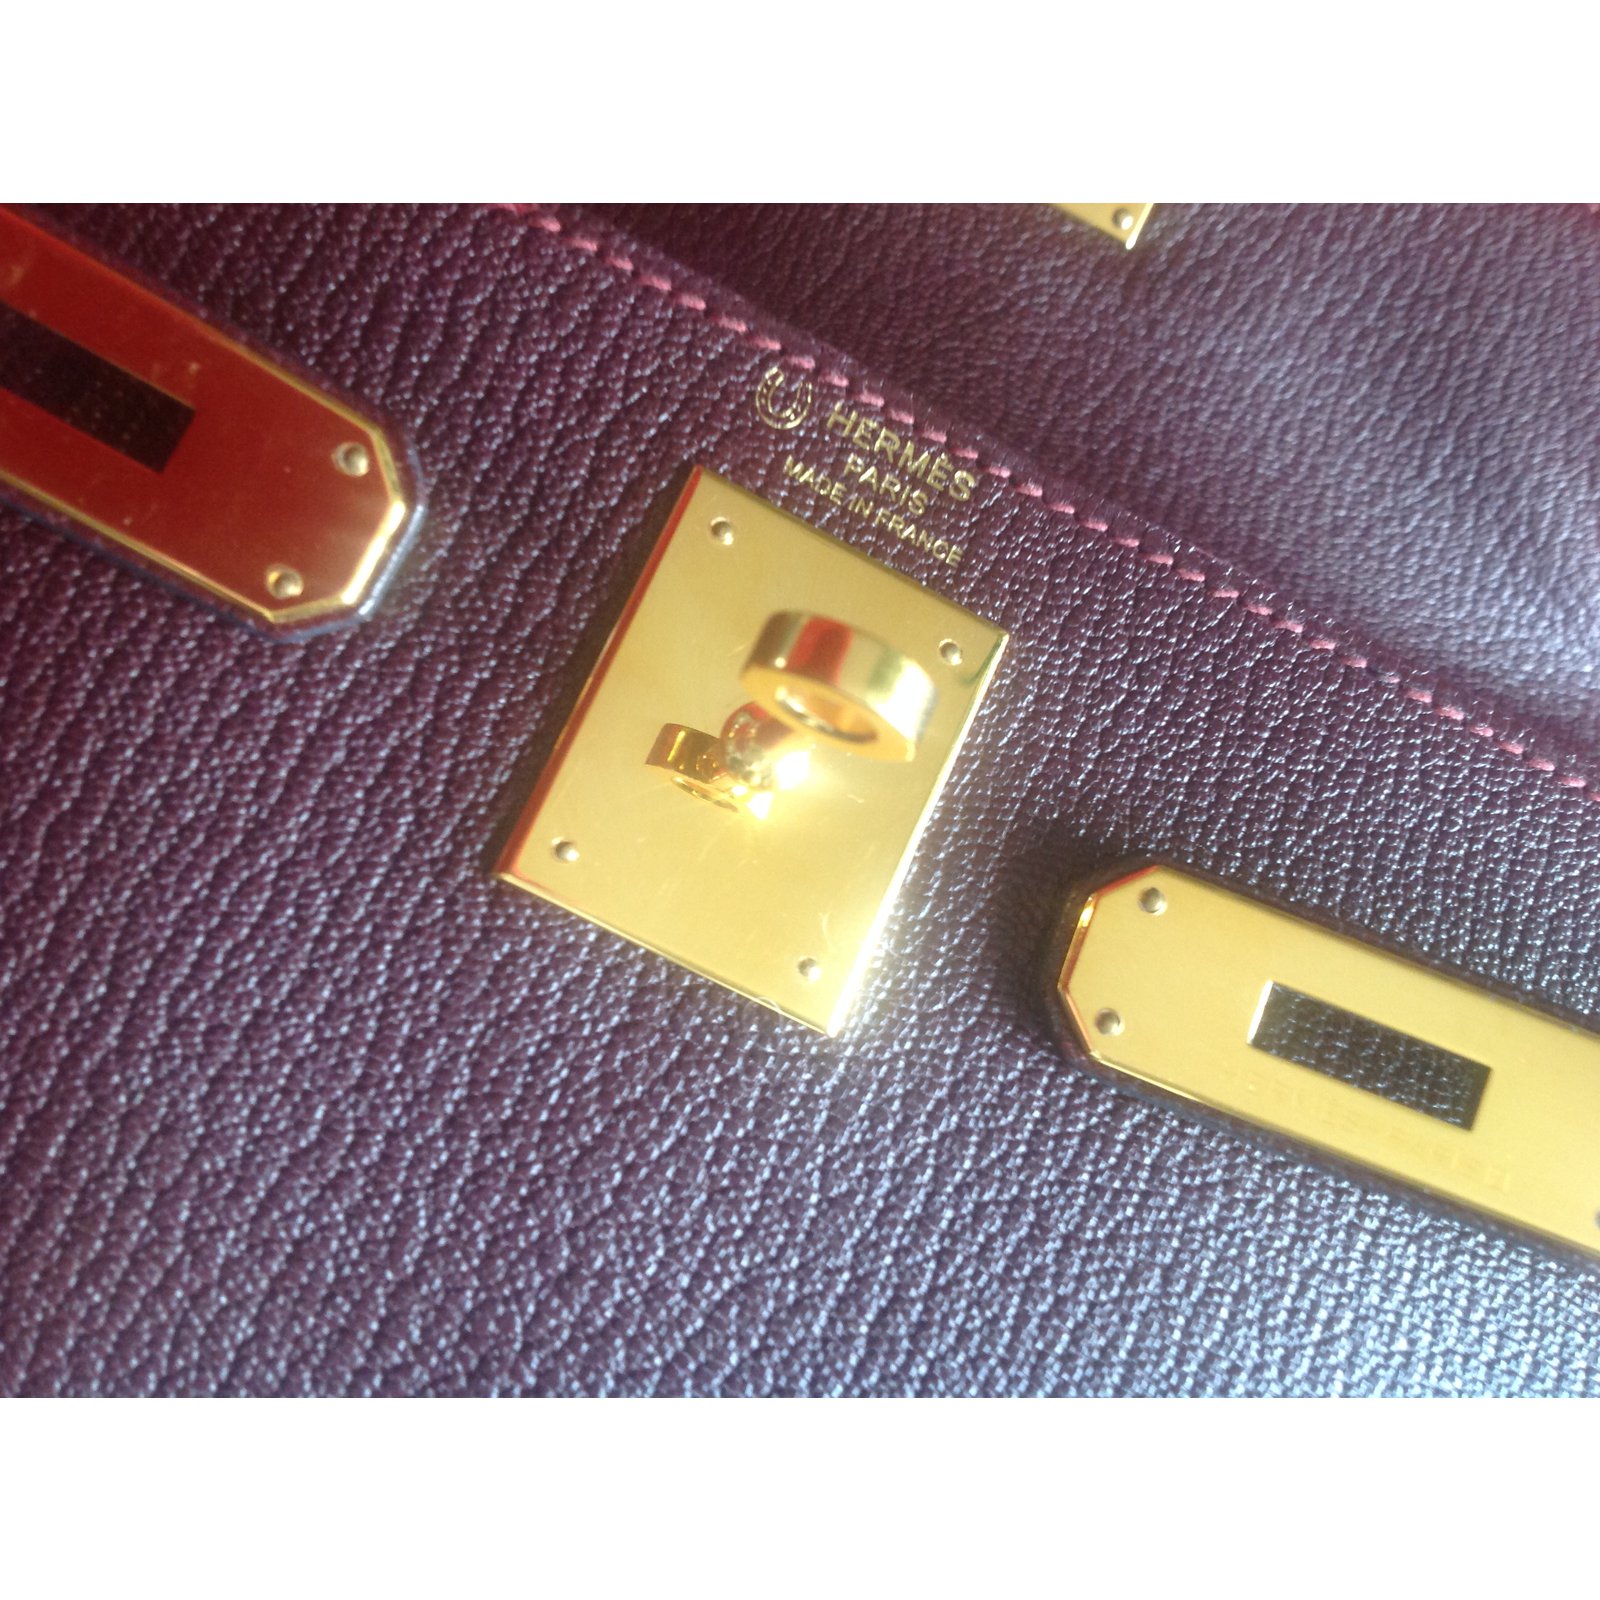 Kelly 28 leather handbag Hermès Purple in Leather - 23653411